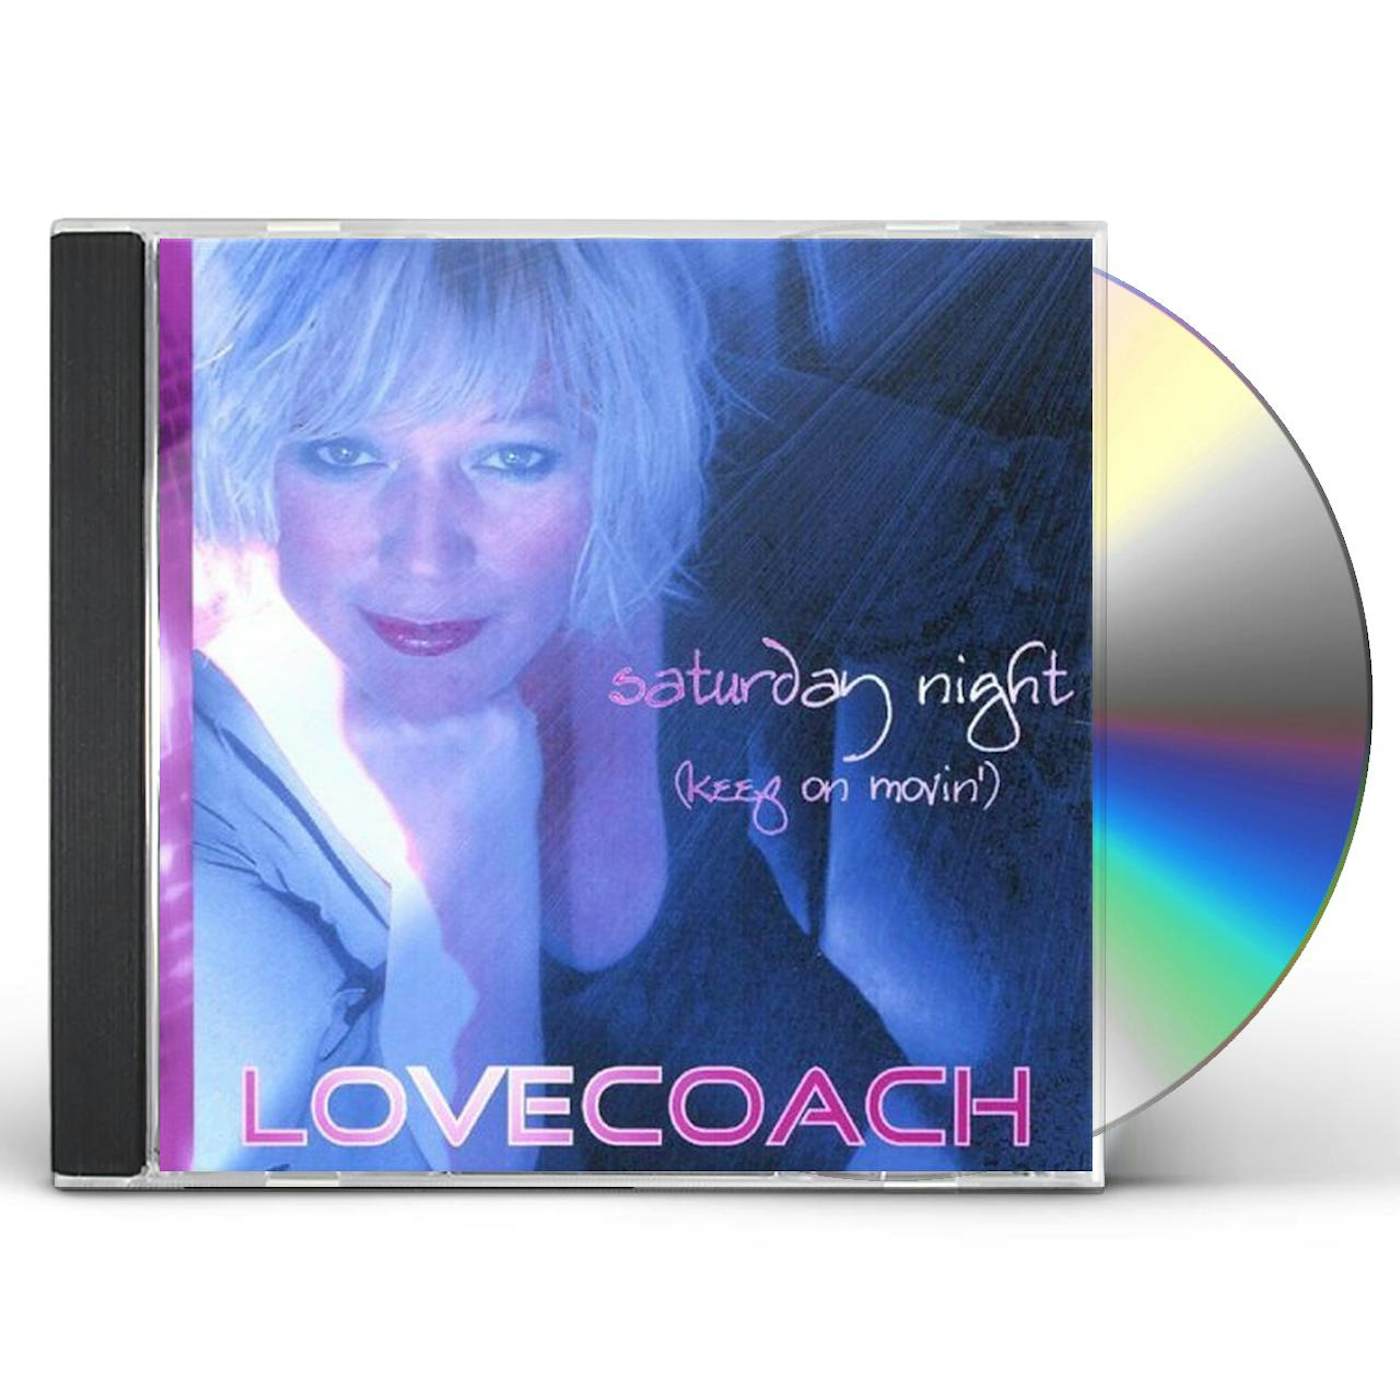 lovecoach SATURDAY NIGHT CD